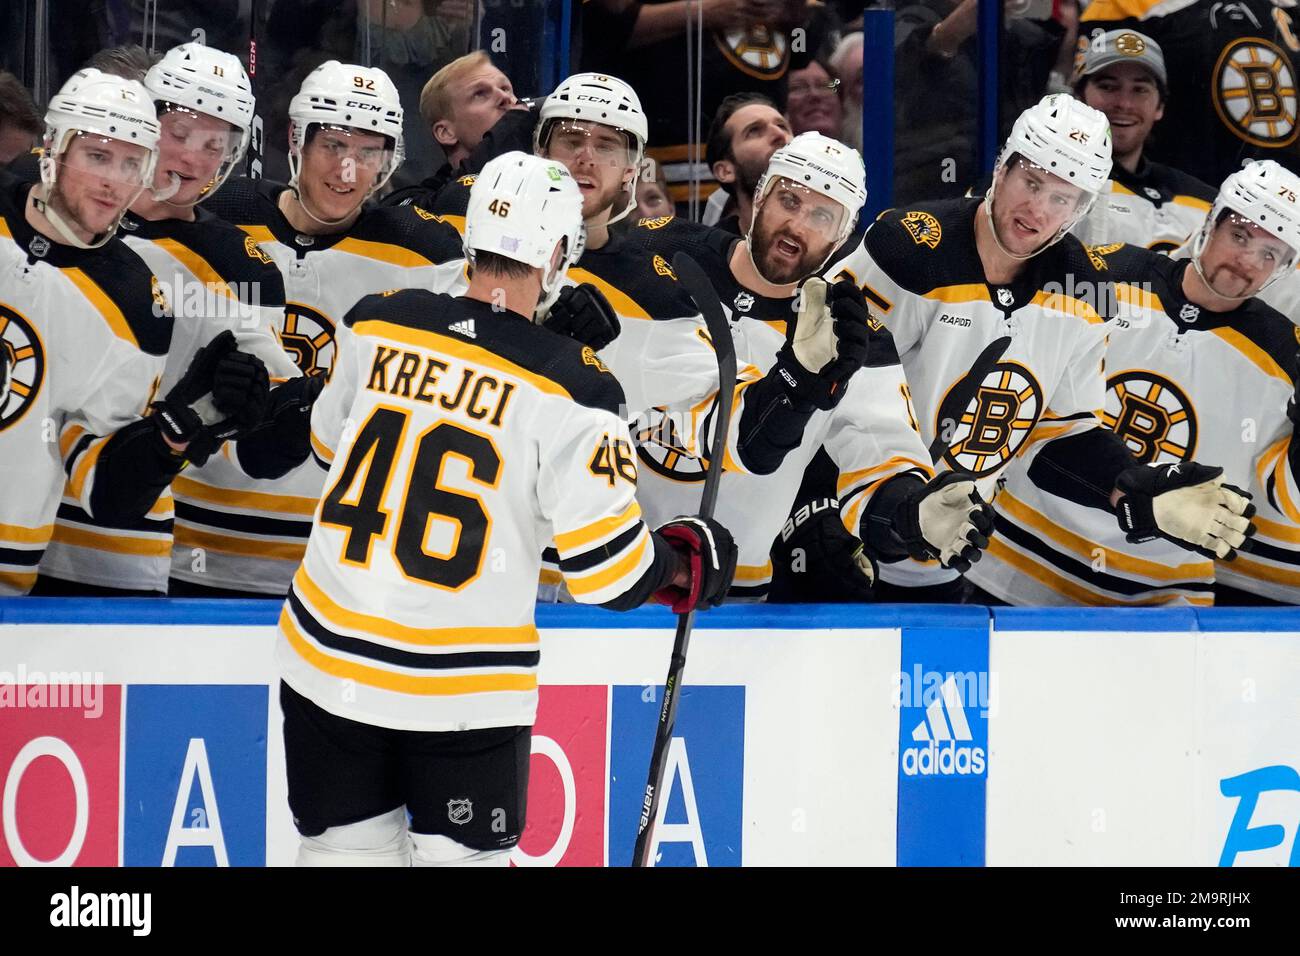 Bruins' David Krejci to take warmups ahead of Game 6